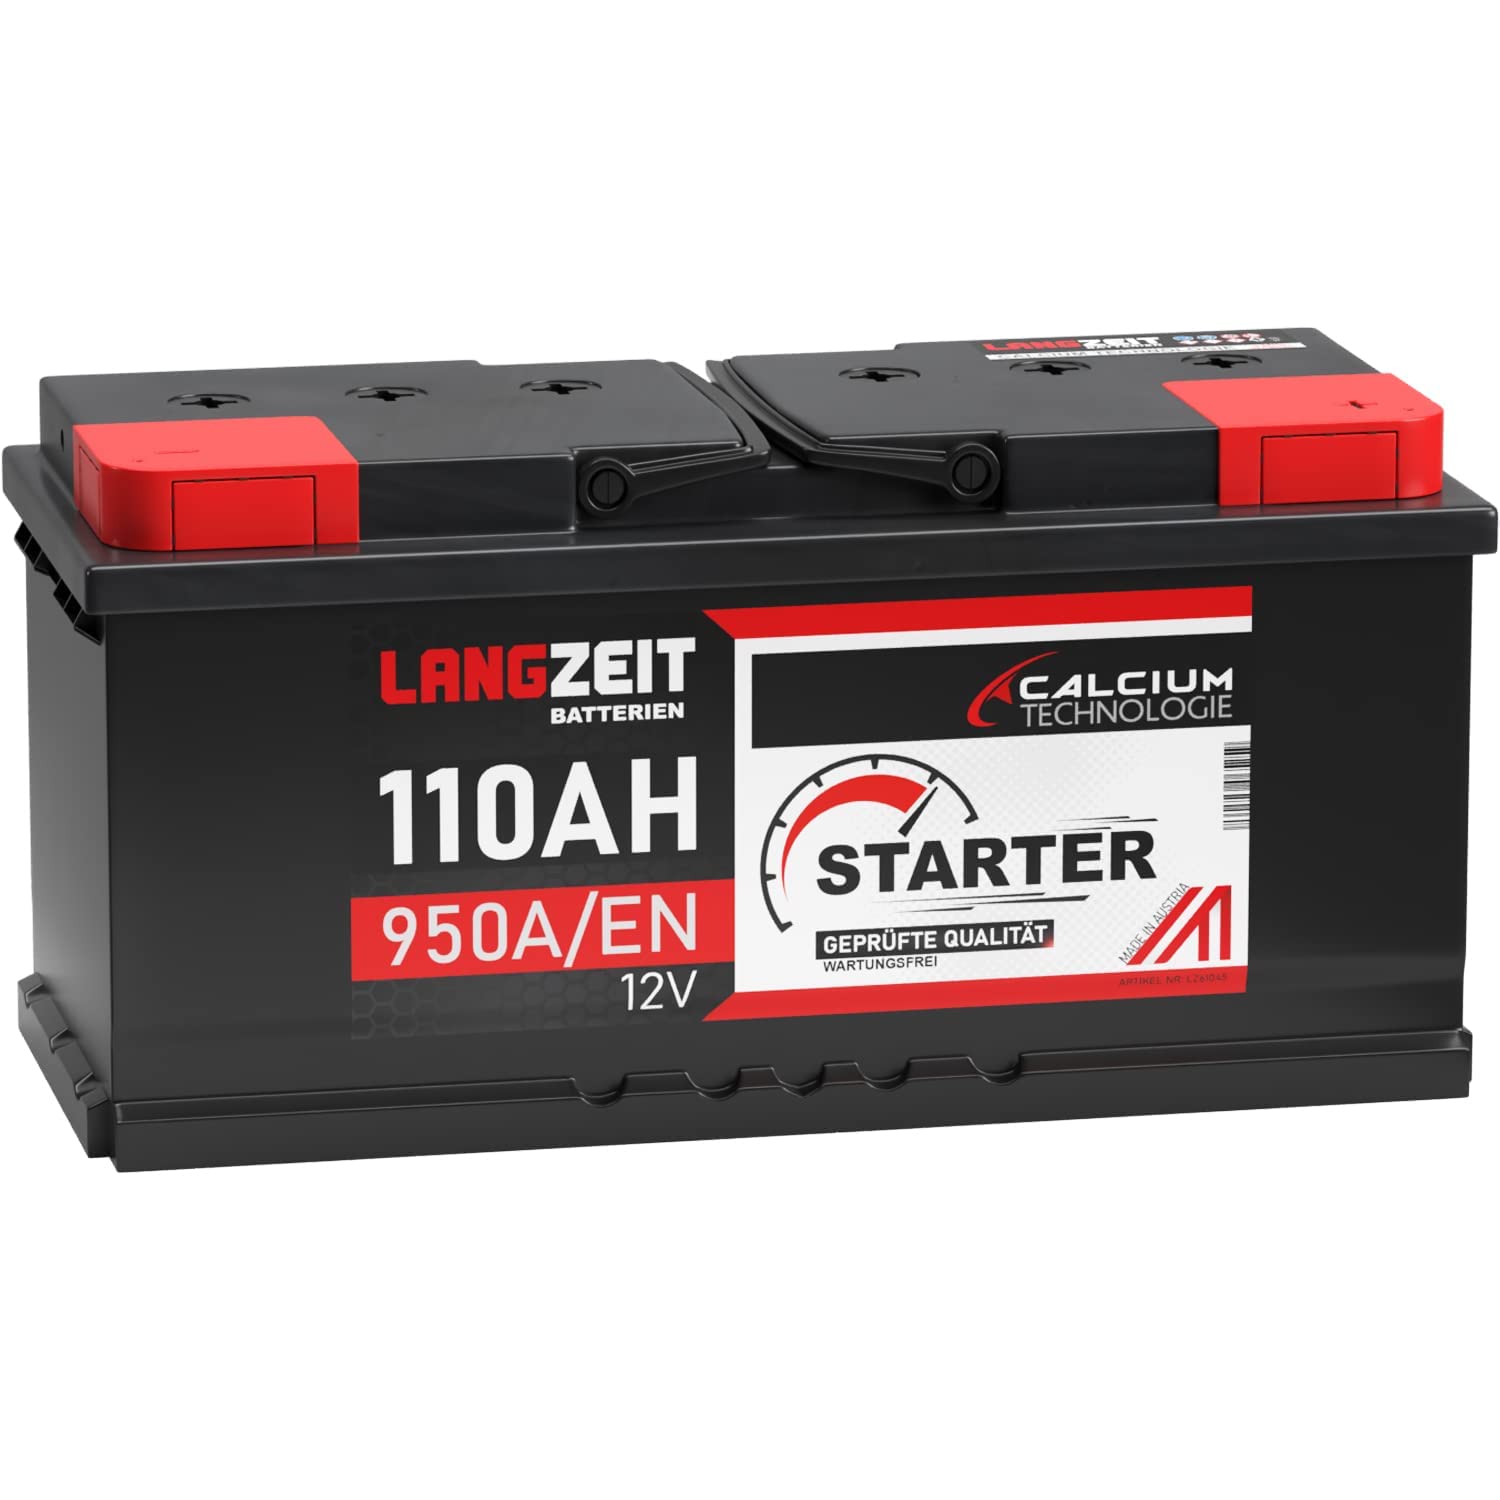 LANGZEIT Autobatterie 110AH 12V 950A/EN Starterbatterie +30% mehr Leistung ersetzt Batterie 100Ah 105Ah von LANGZEIT Batterien